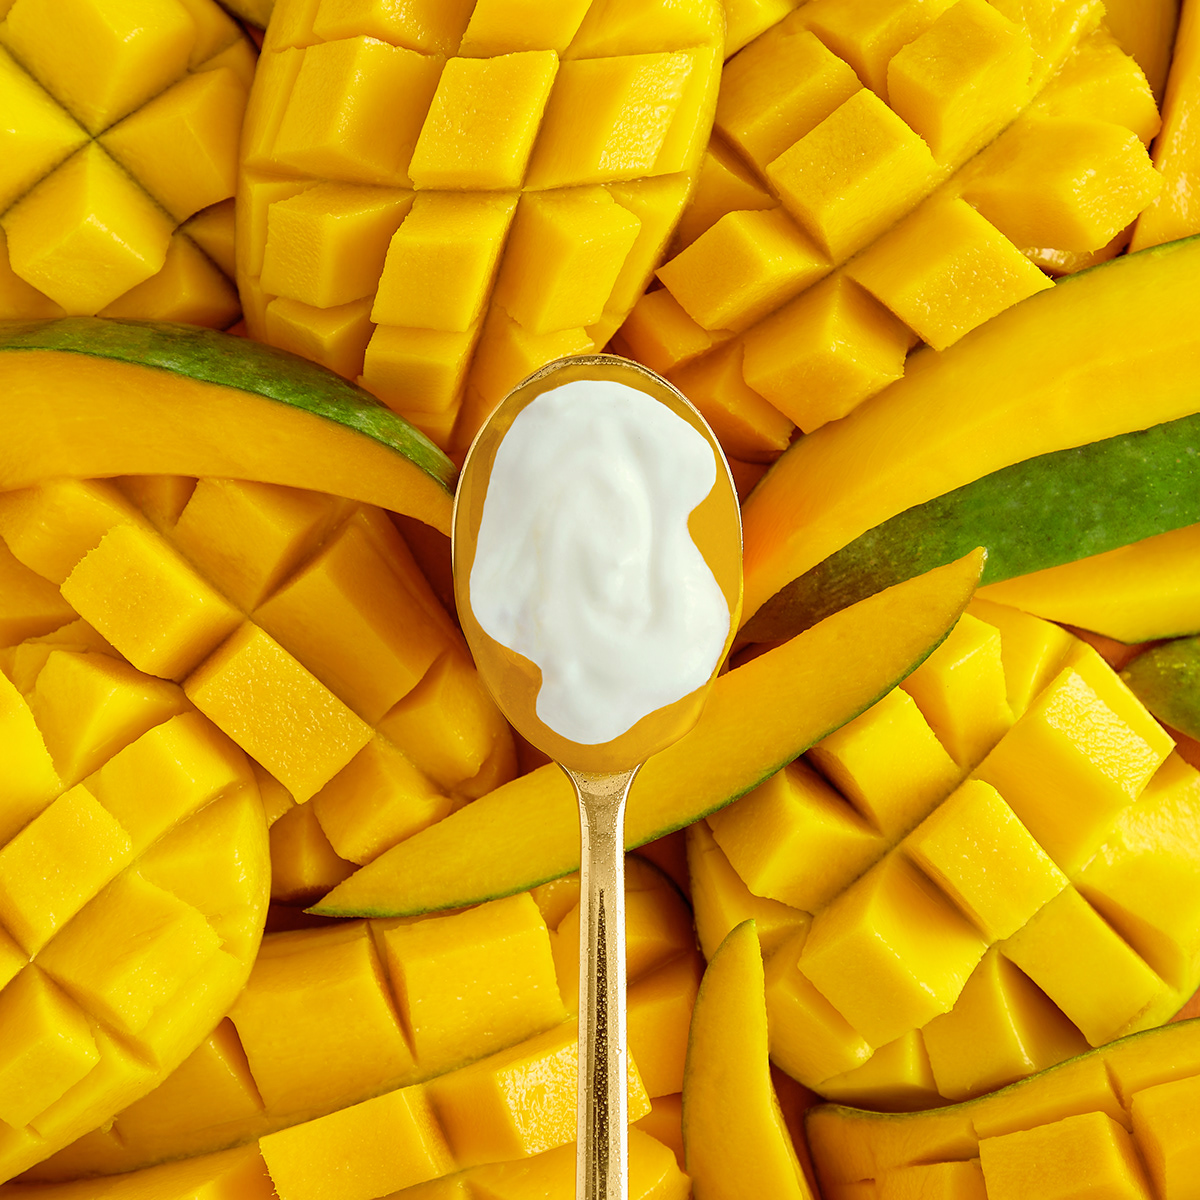 Danone yogurt milk Dairy food photography Fruit lifestyle photoshoot